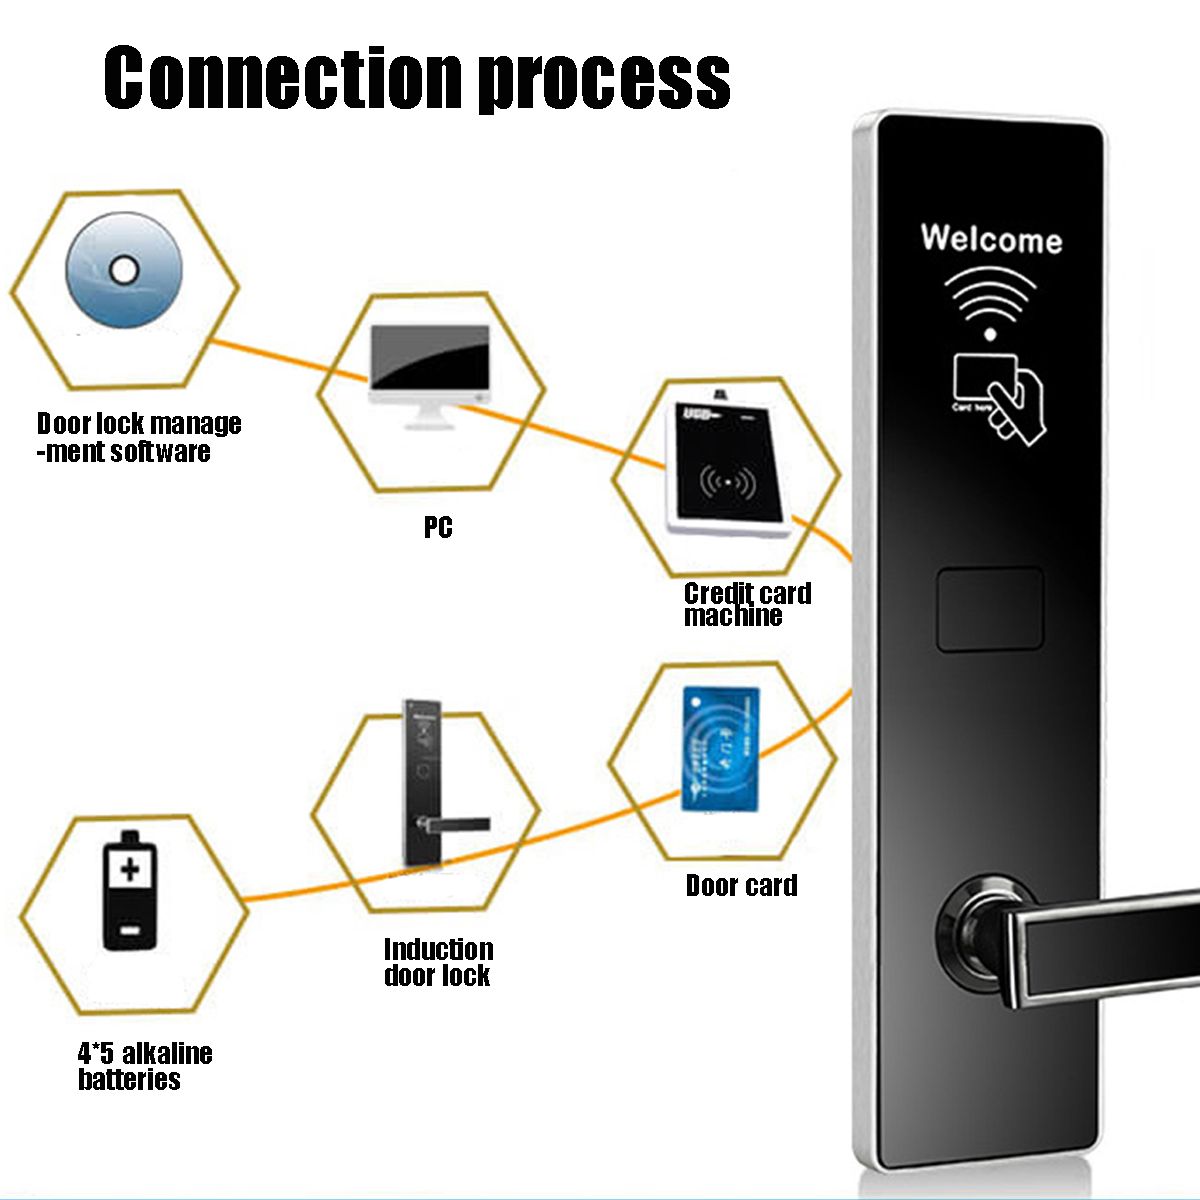 Digital-Keyless-Electronic-Code-Card-Access-Control-Door-Lock-Stainless-Steel-Lock-Security-Hotel-1591145